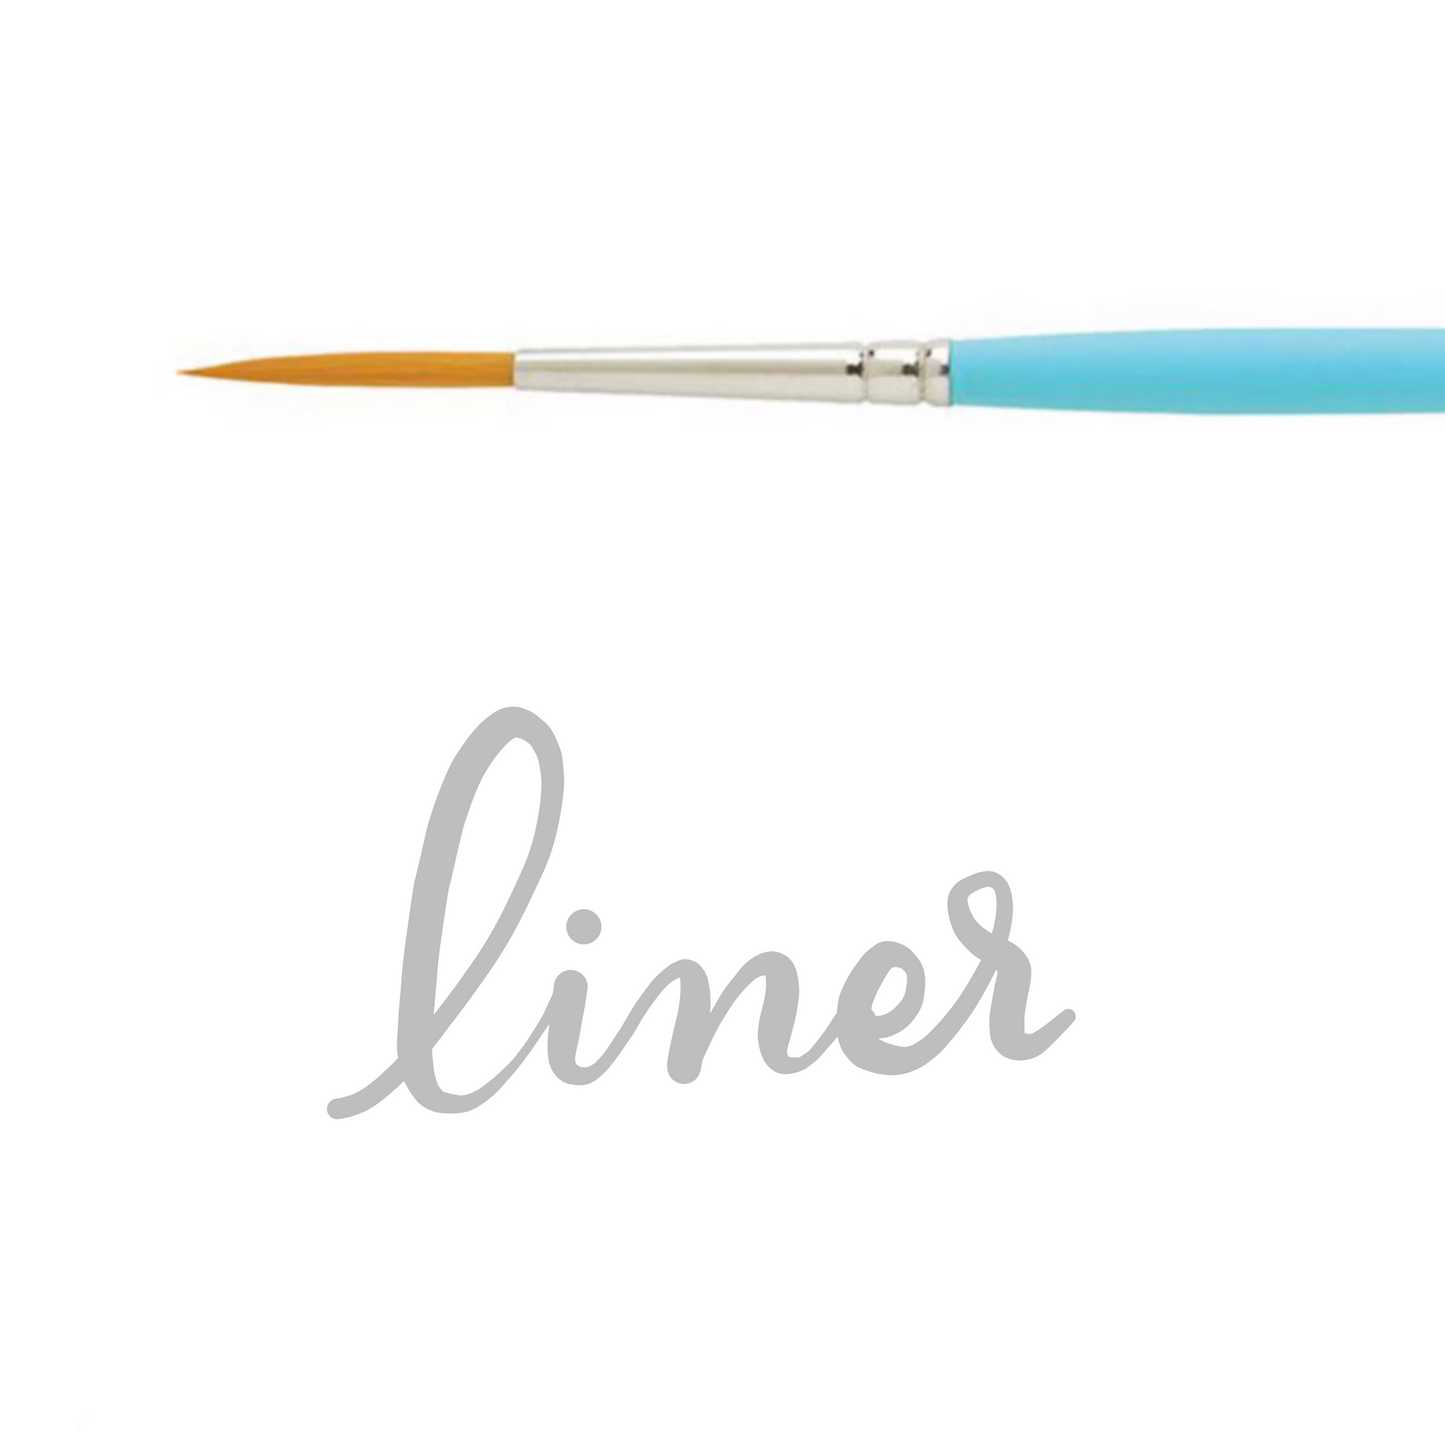 Princeton Select Artiste Mixed Media Paintbrushes - Liner (Petite) - by Princeton - K. A. Artist Shop